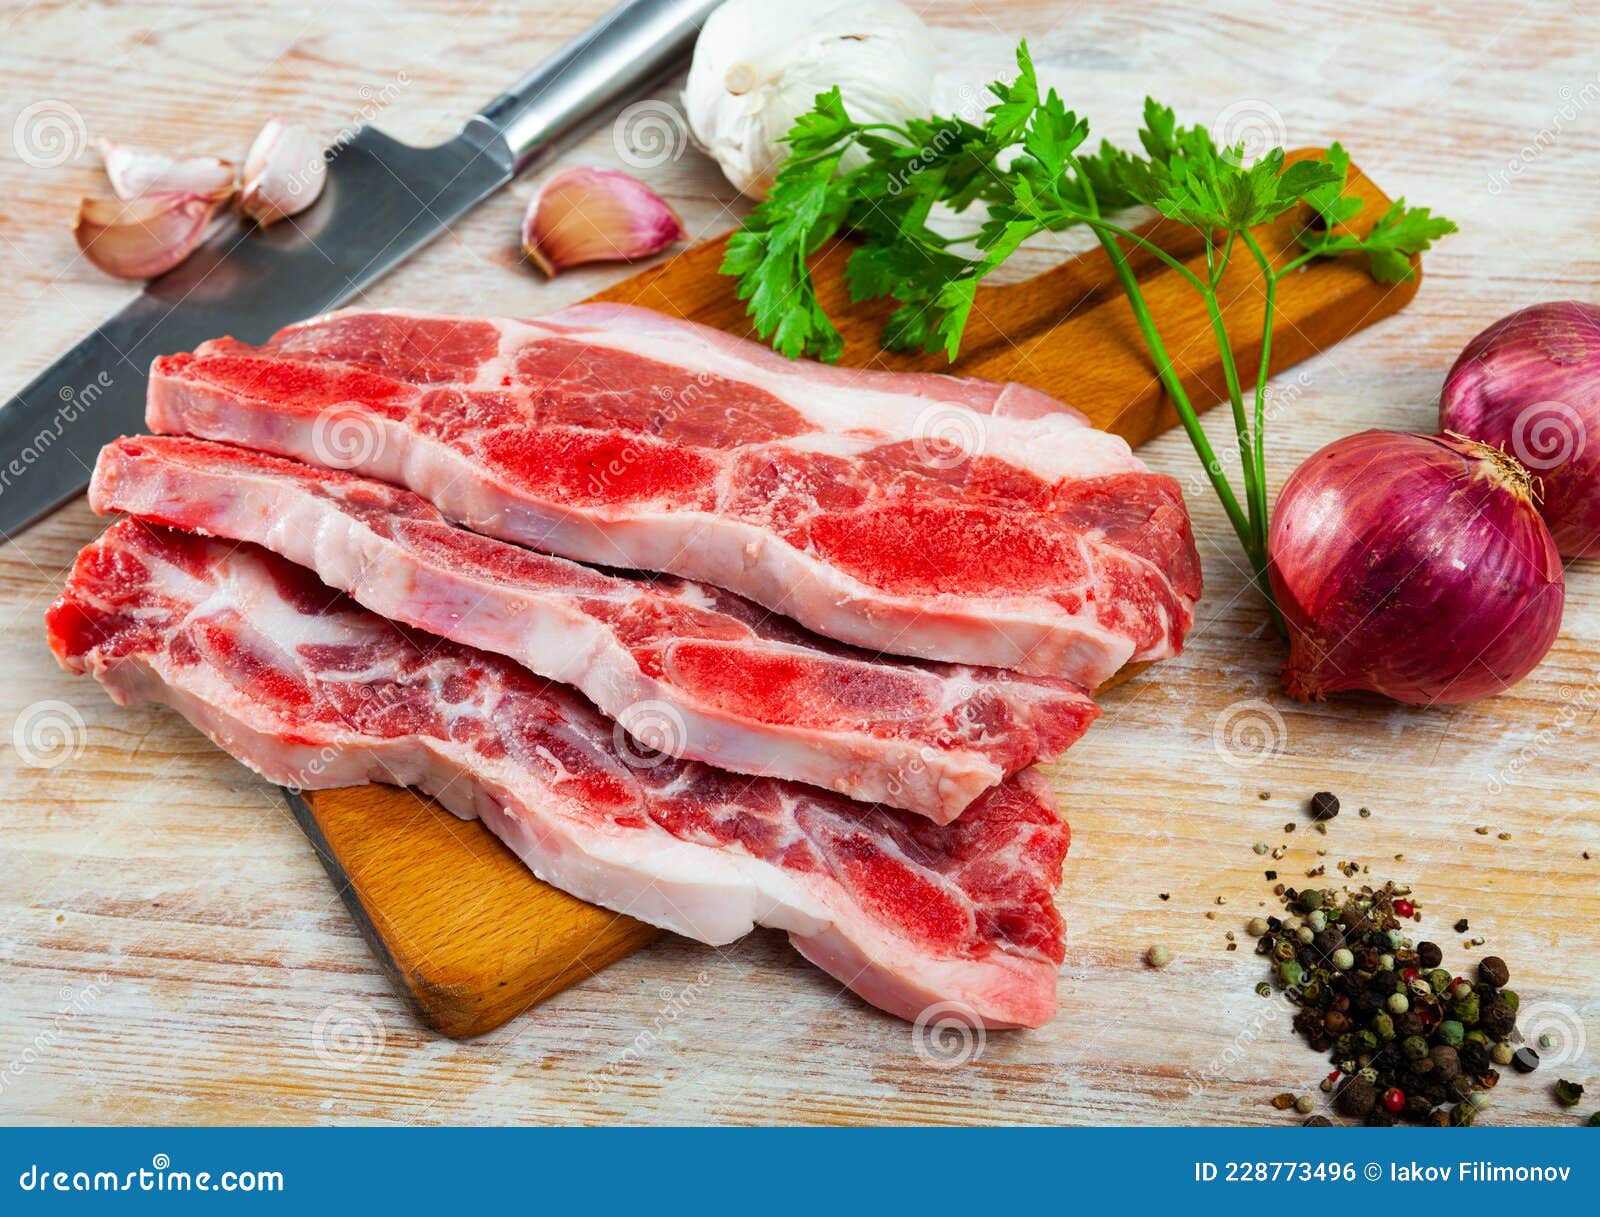 https://thumbs.dreamstime.com/z/raw-churrasco-thin-slices-beef-meat-raw-churrasco-thin-slices-beef-rib-meat-popular-ingredient-grilled-meat-spain-228773496.jpg